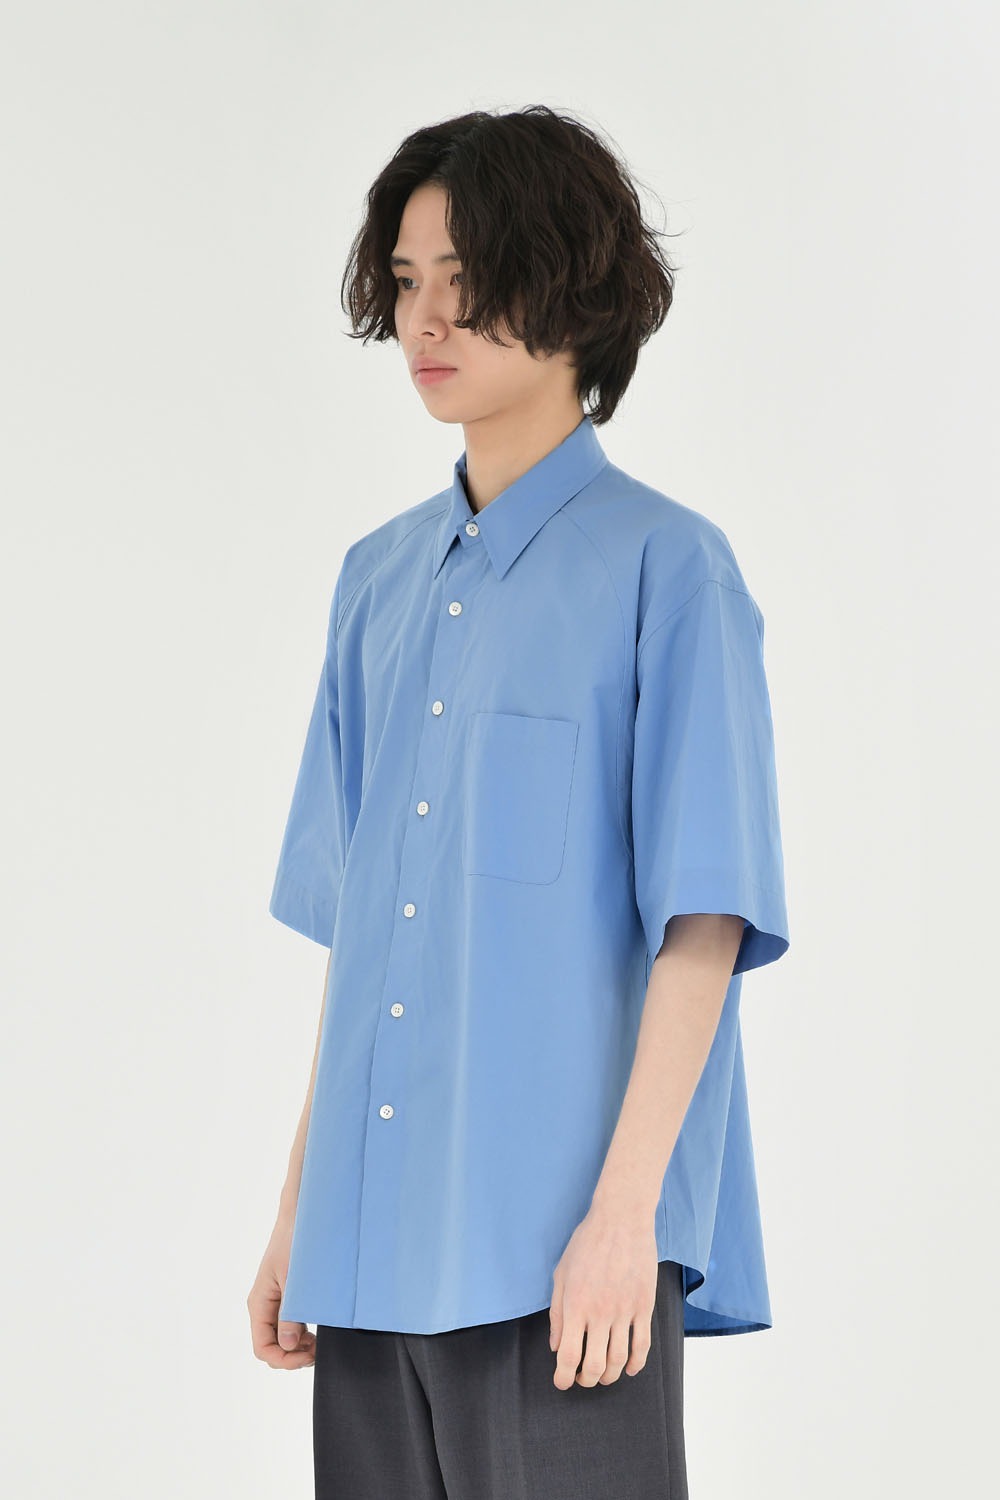 Half Shirt-Sax Blue